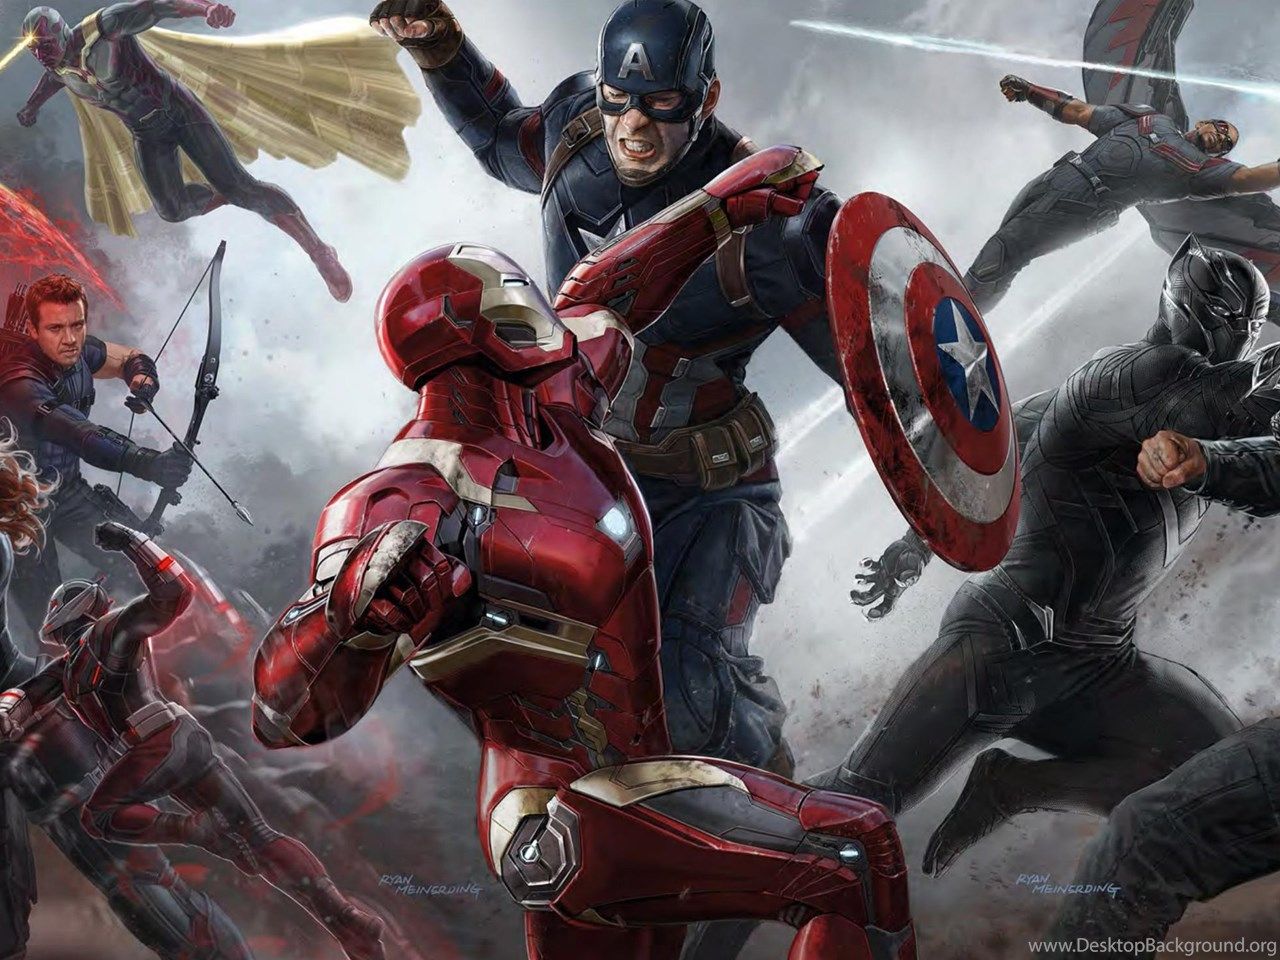 Movie Wallpaper: Captain America Civil War Desktop Background. Desktop Background